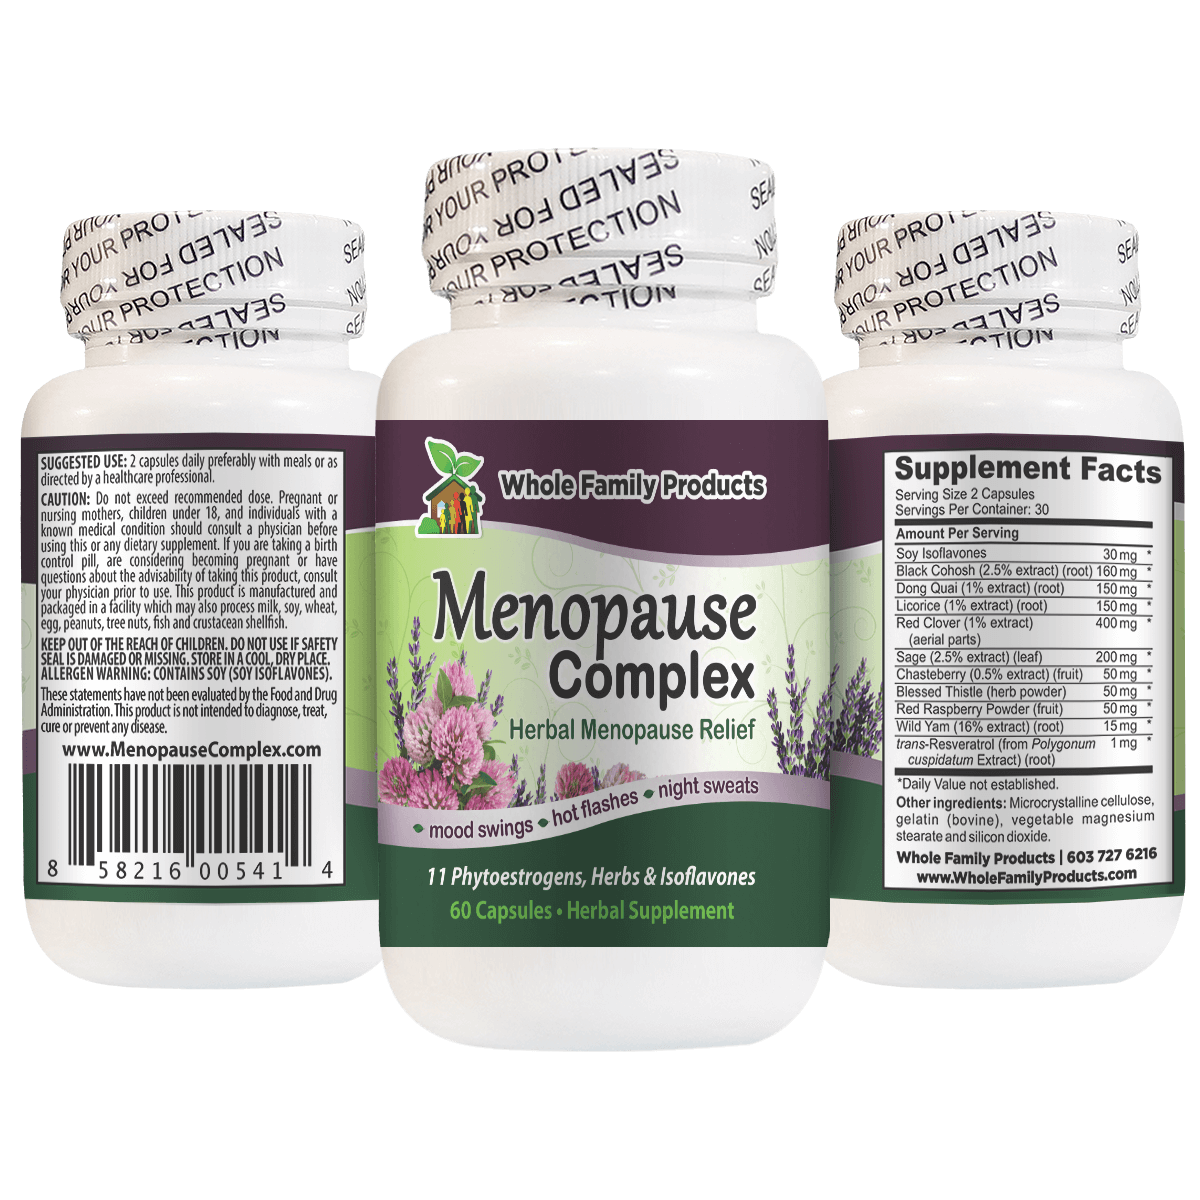 Menopause Complex Natural Herbal Menopause Relief for Mood Swings